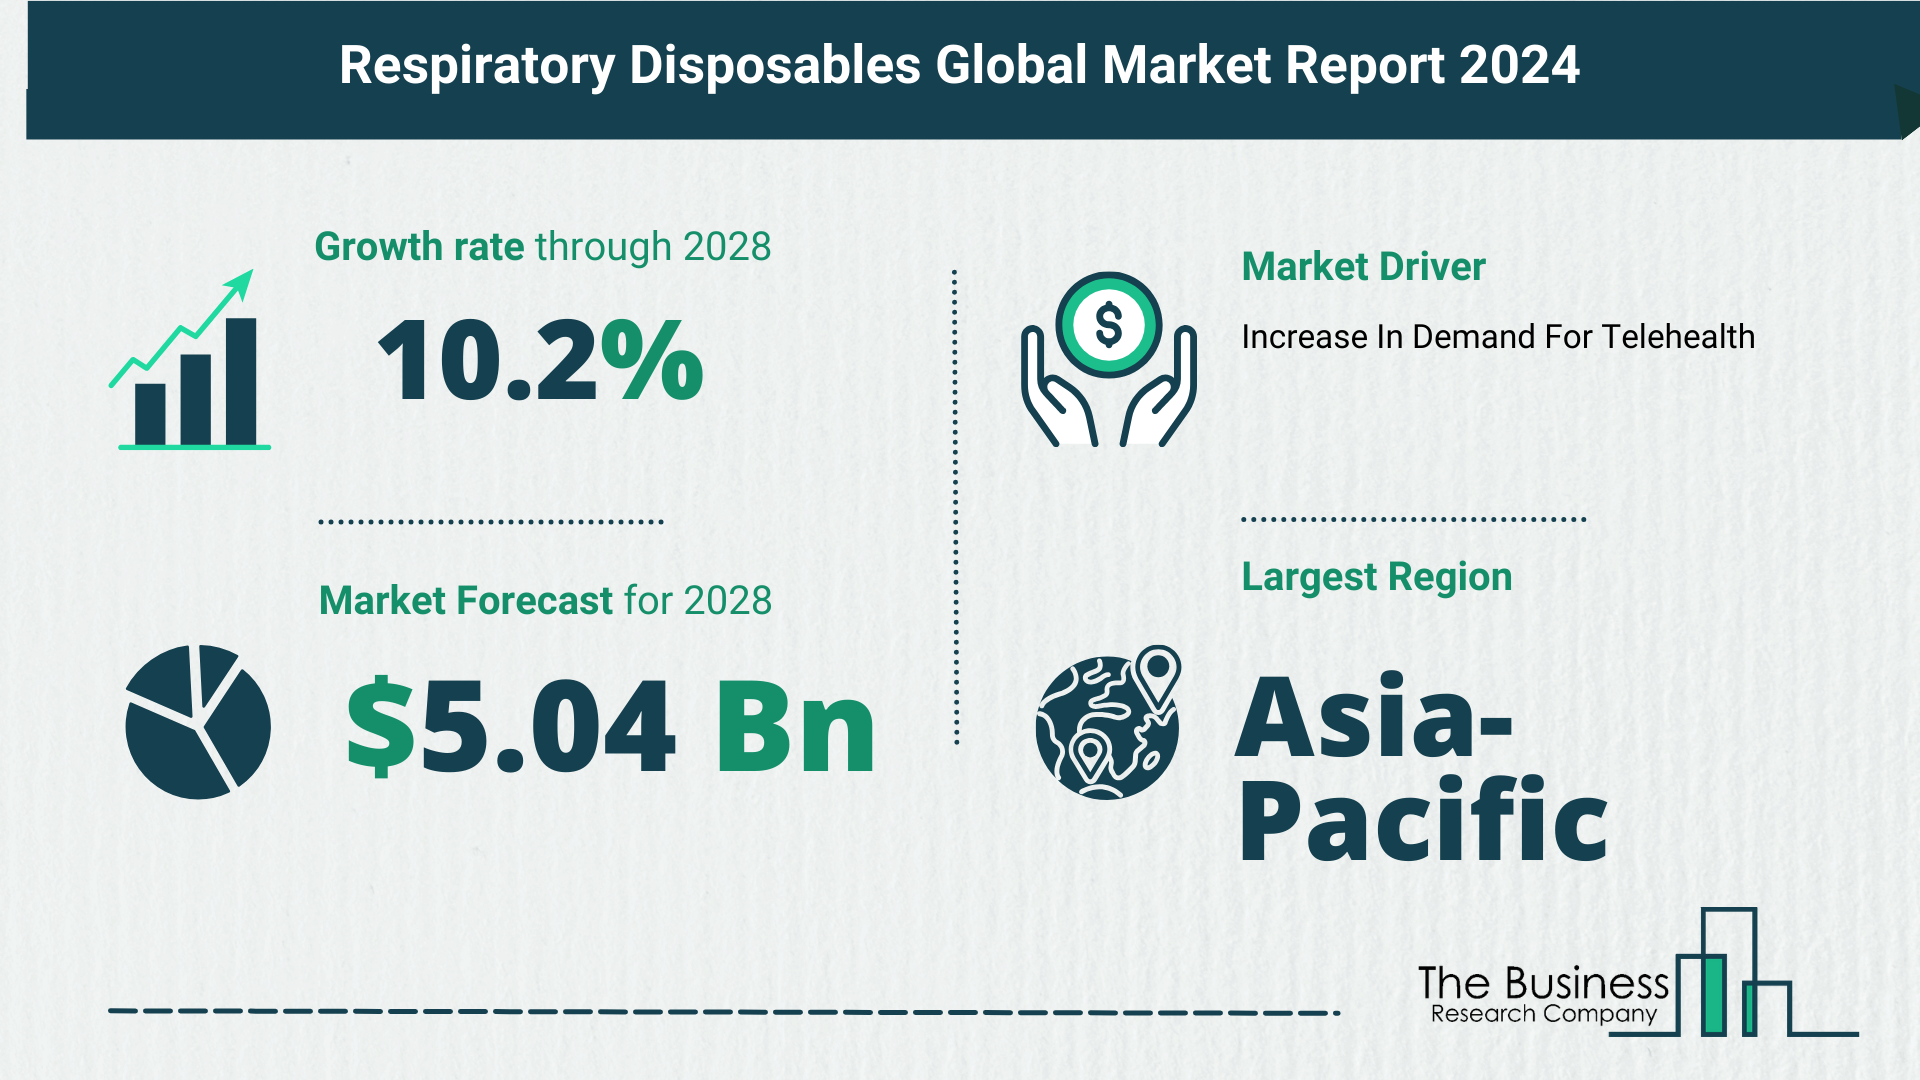 Respiratory Disposables Market Forecast 2024: Forecast Market Size, Drivers And Key Segments